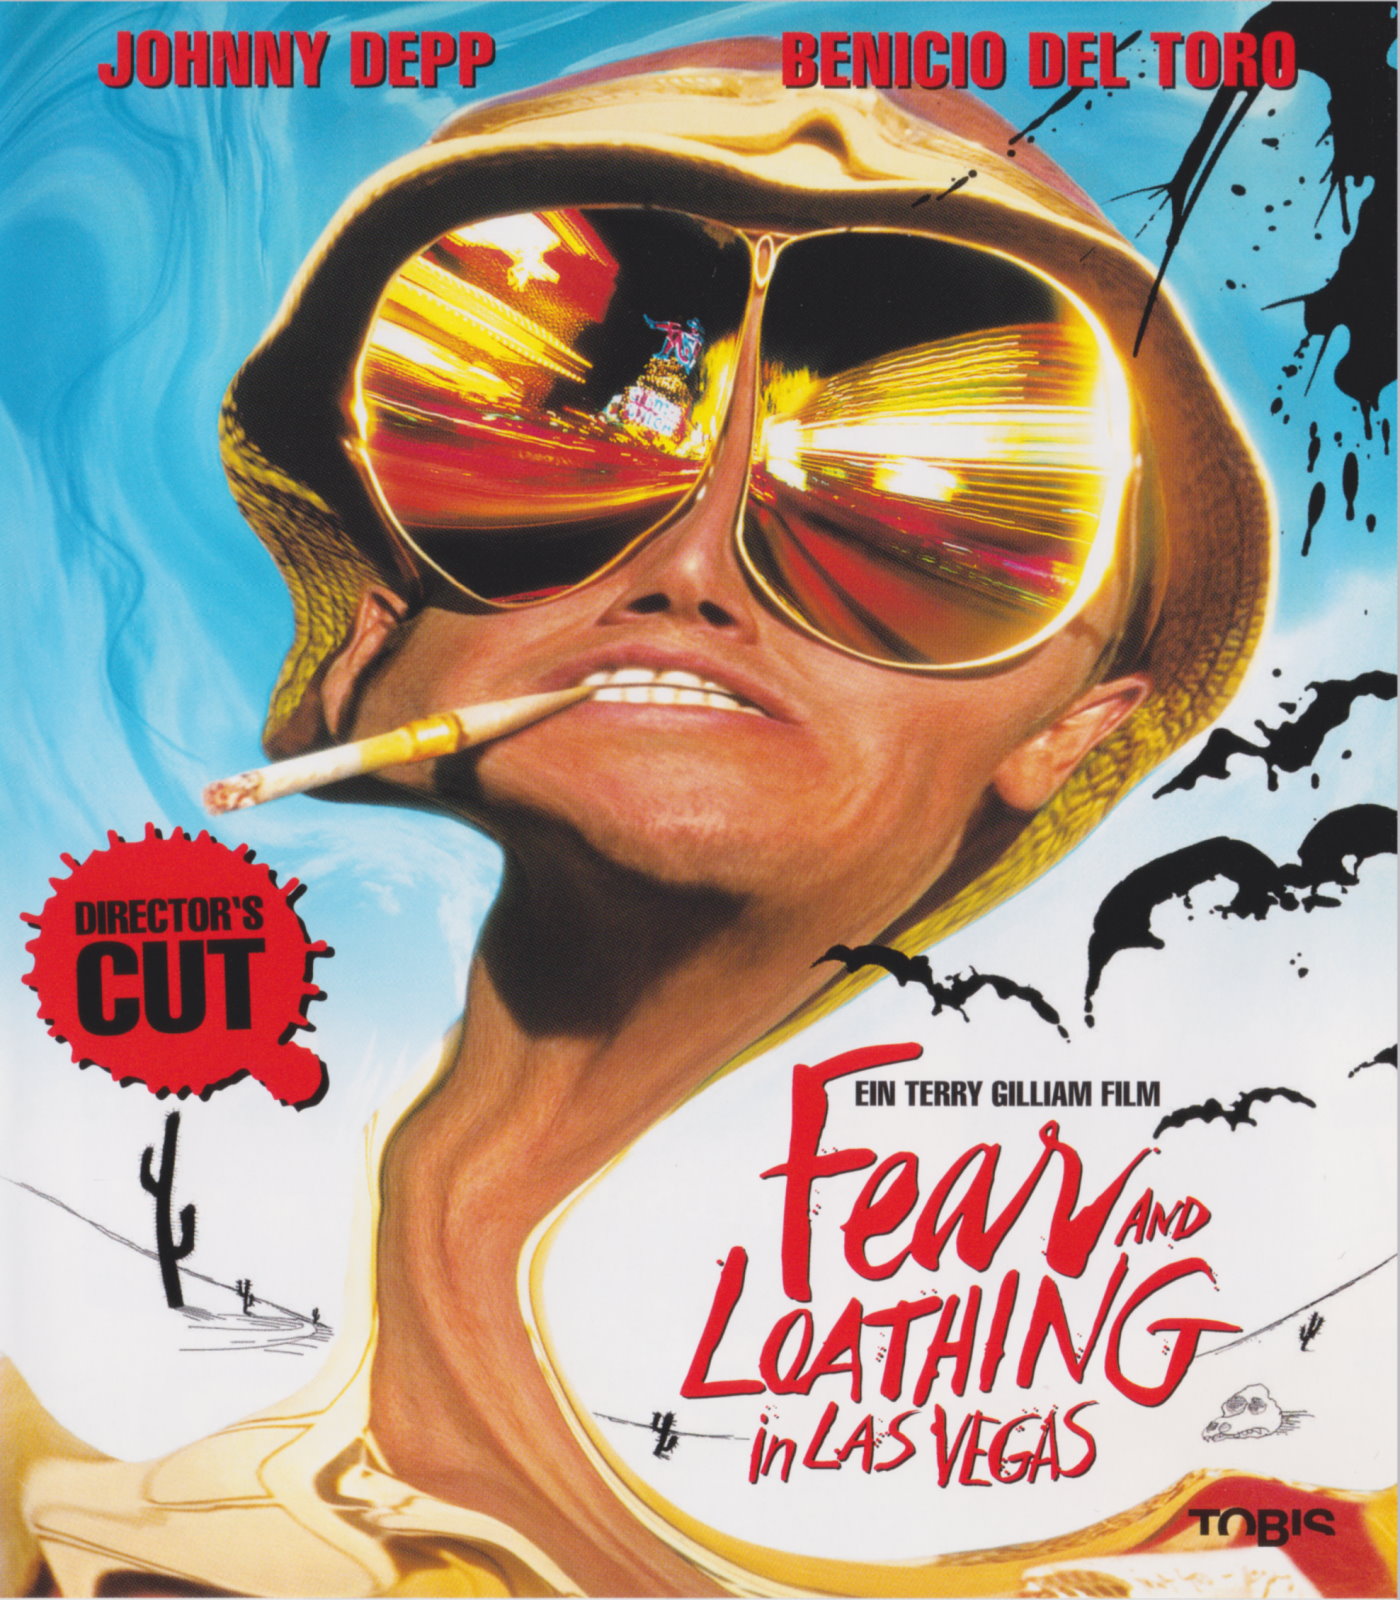 Cover - Fear and Loathing in Las Vegas.jpg